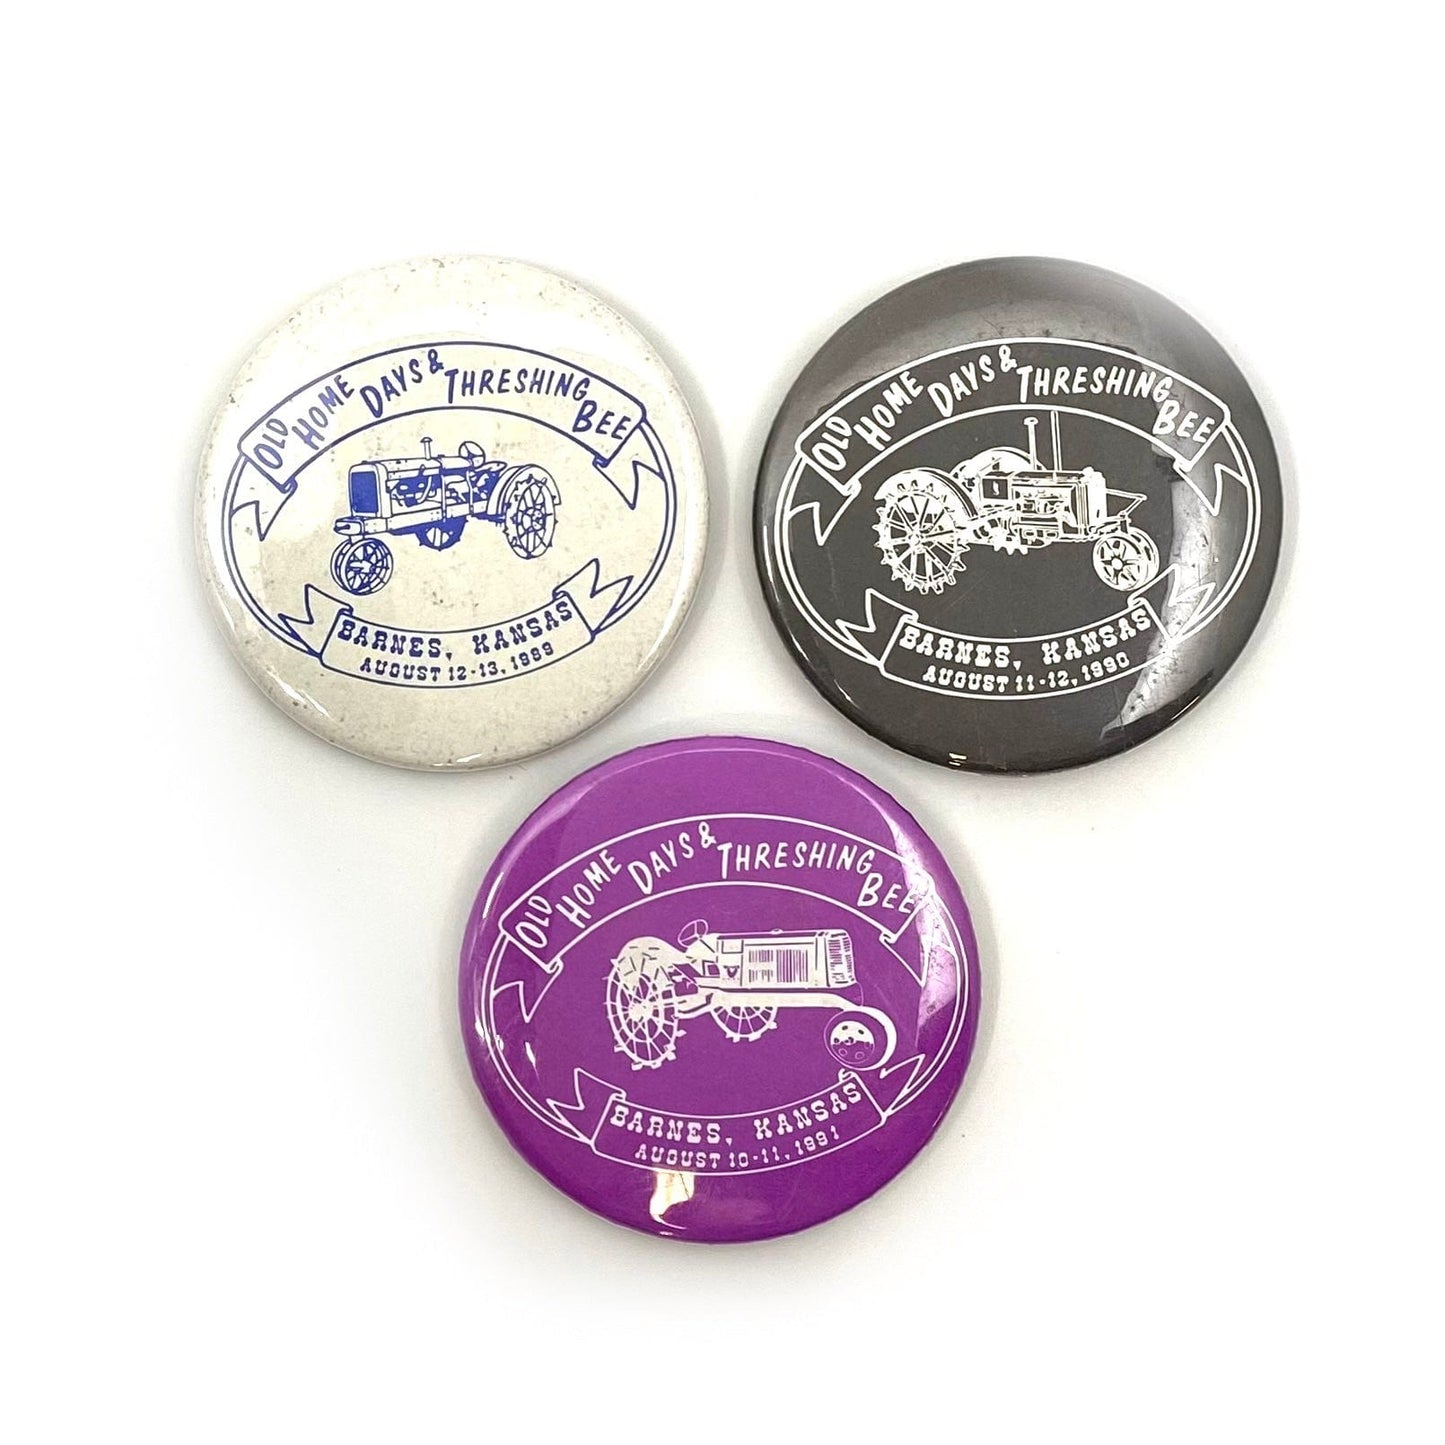 Old Home Days & Threshing Bee - Barnes, KS ‘89-‘91 Pinback Button, Set of 3